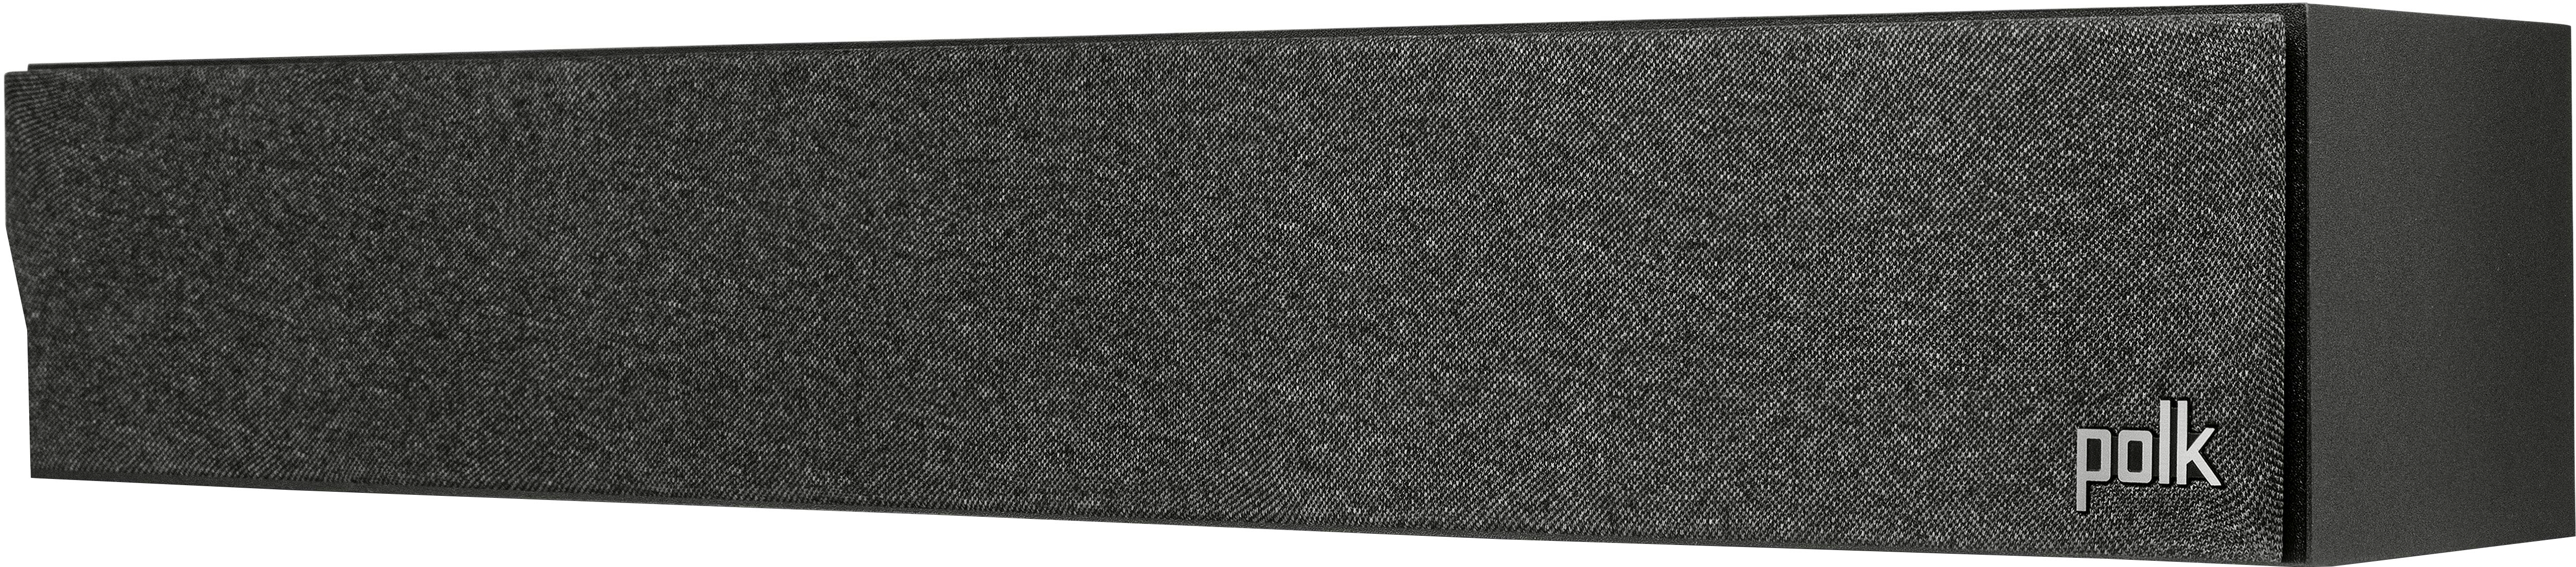 Angle View: PreSonus - Eris 2.0 50 W Speaker System - Wall Mountable - Multi